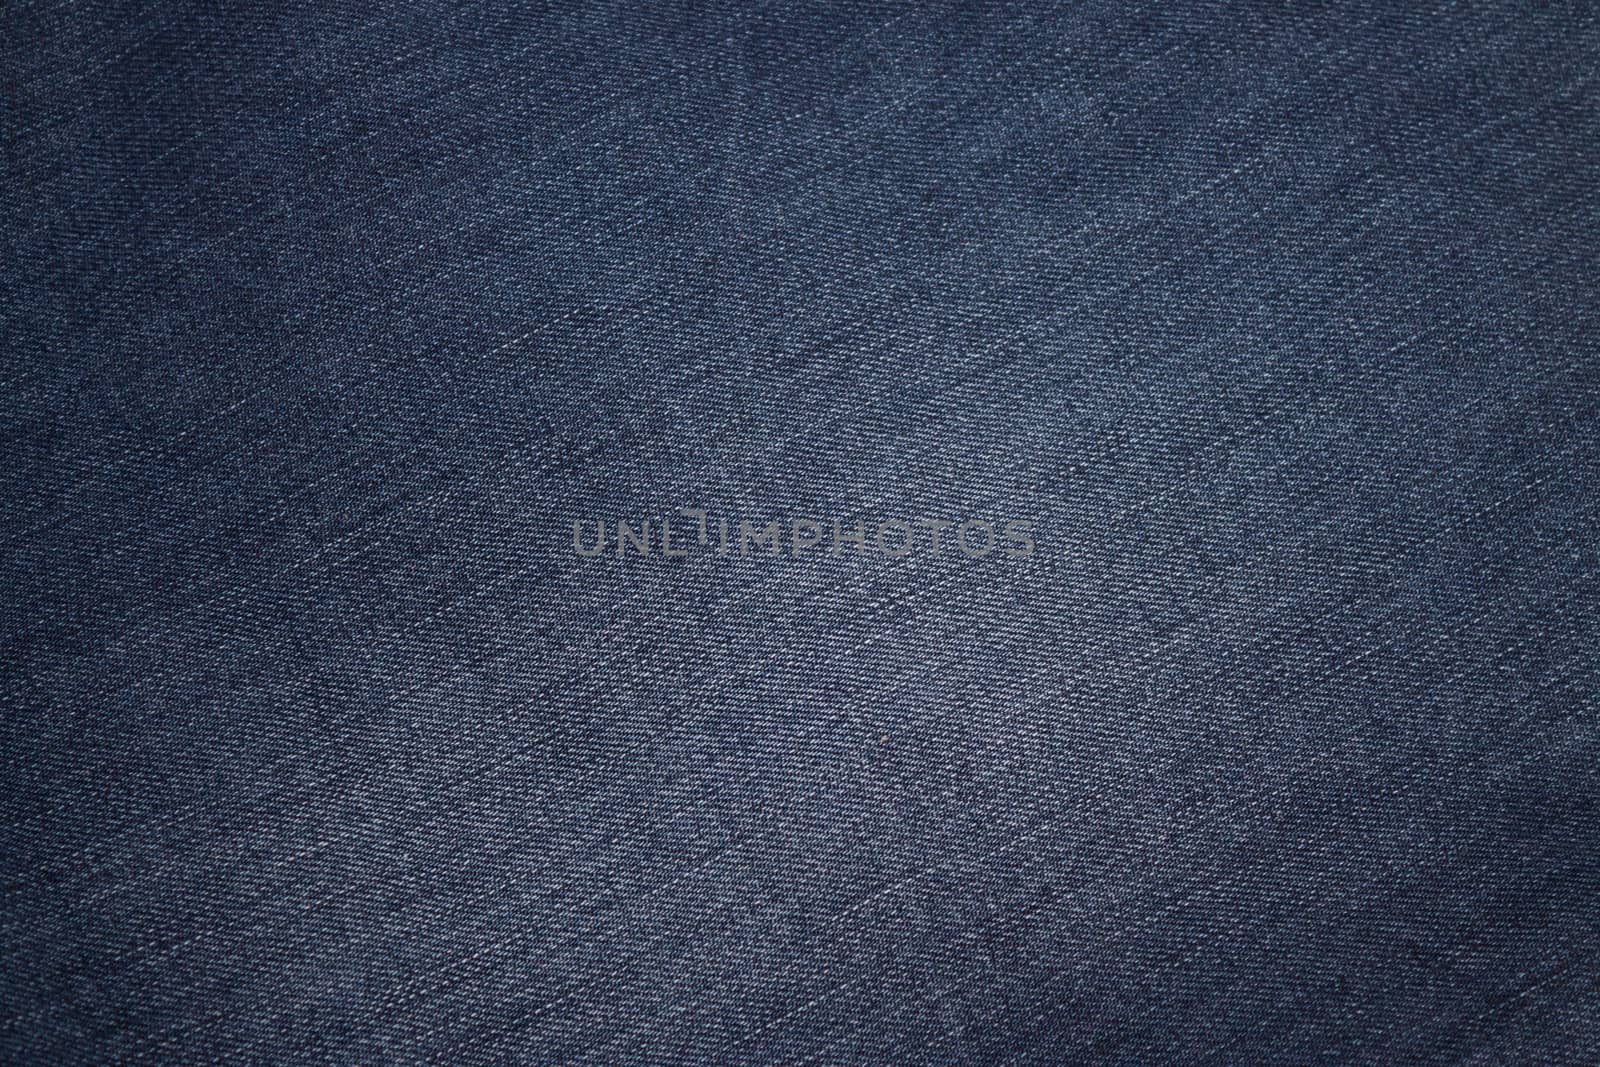 Close-up High quality texture jeans. Denim by nolimit046